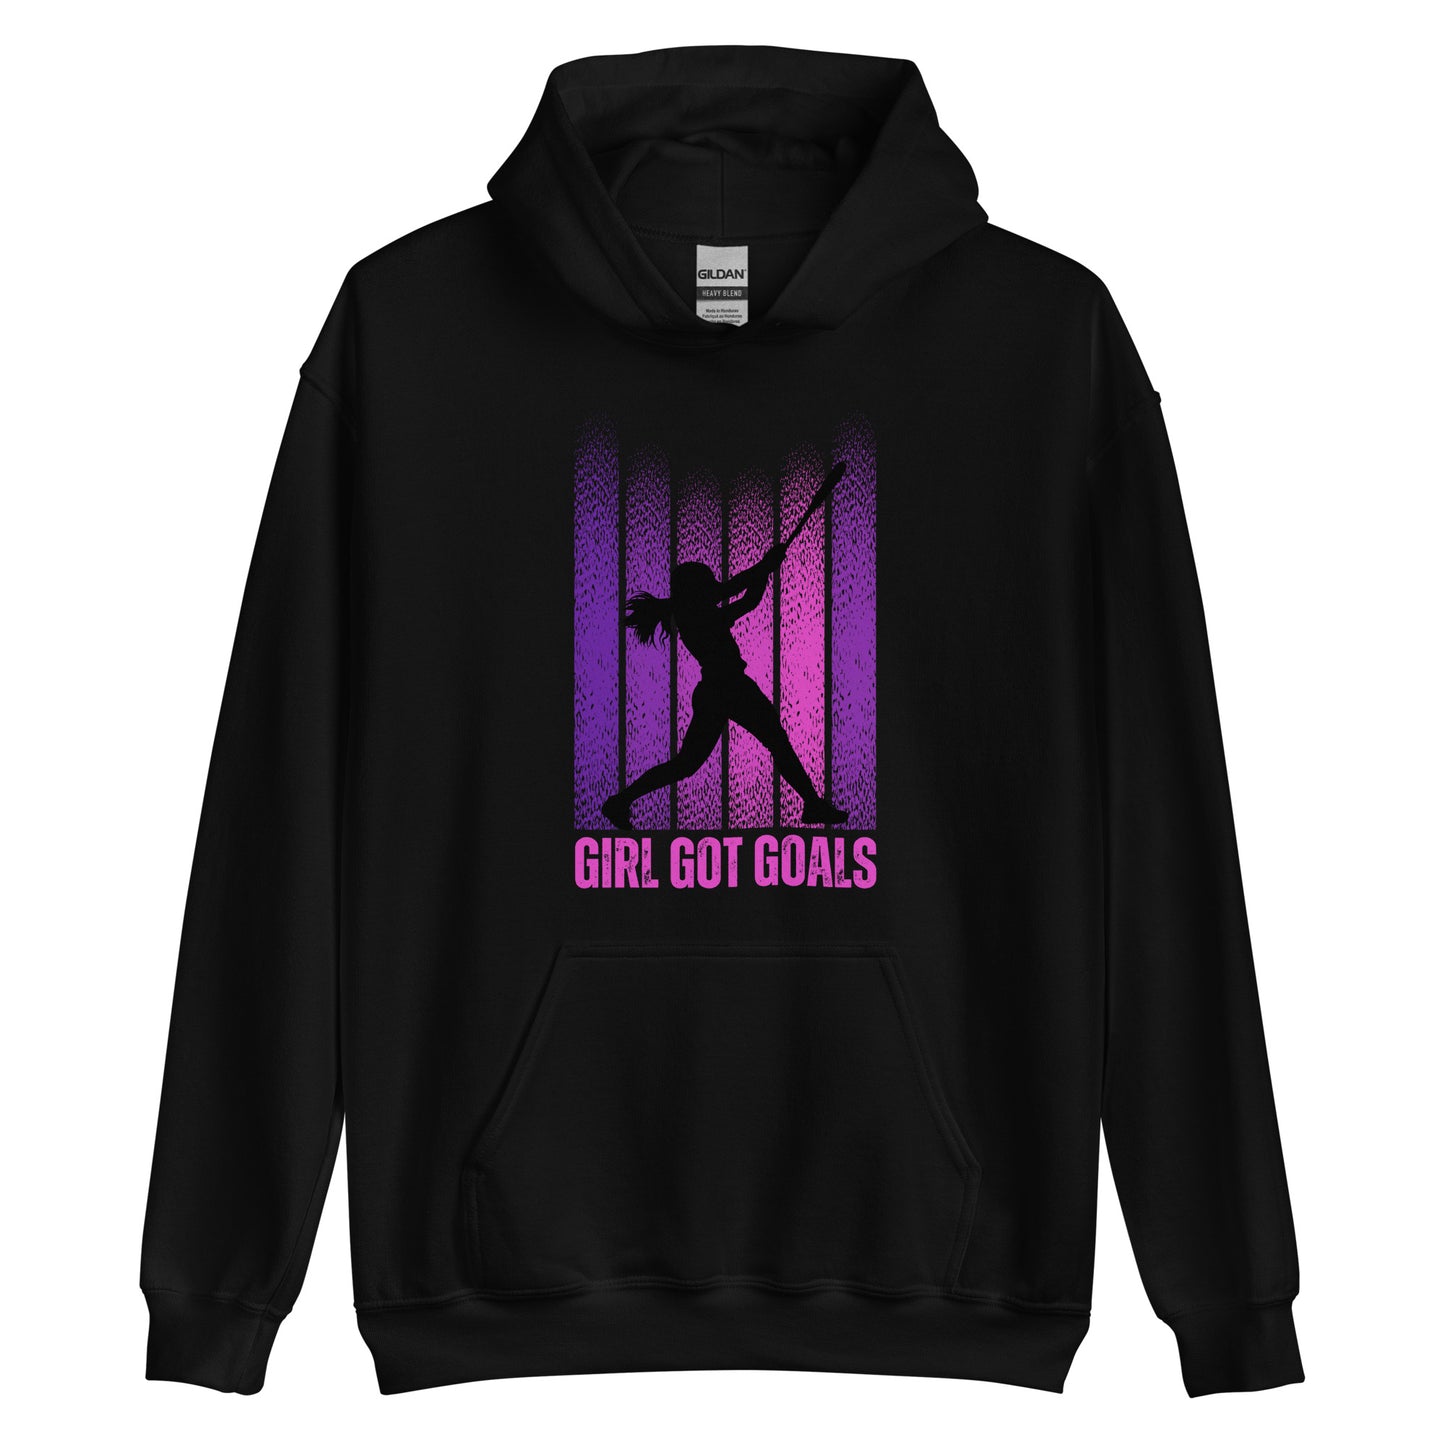 Girl Got Goals - Unisex Regular Fit Adult Hoodie